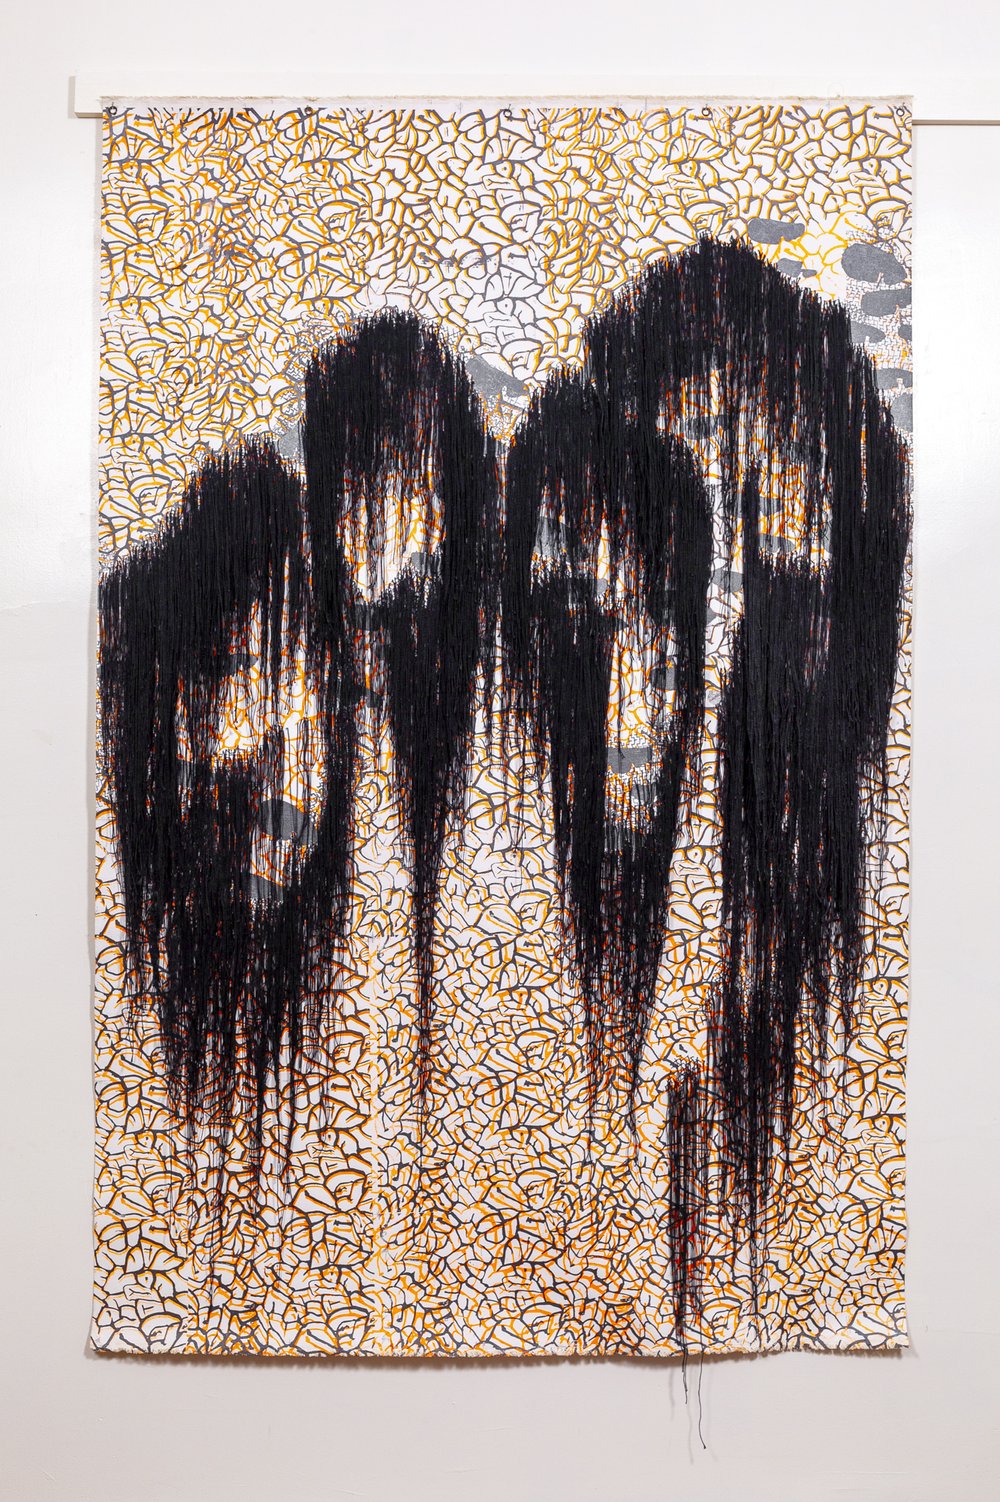  Mimi Biyao Bai,  Family Vacation , 2023, Silkscreen and thread on canvas, 72 x 46 x 1/2 inches. 